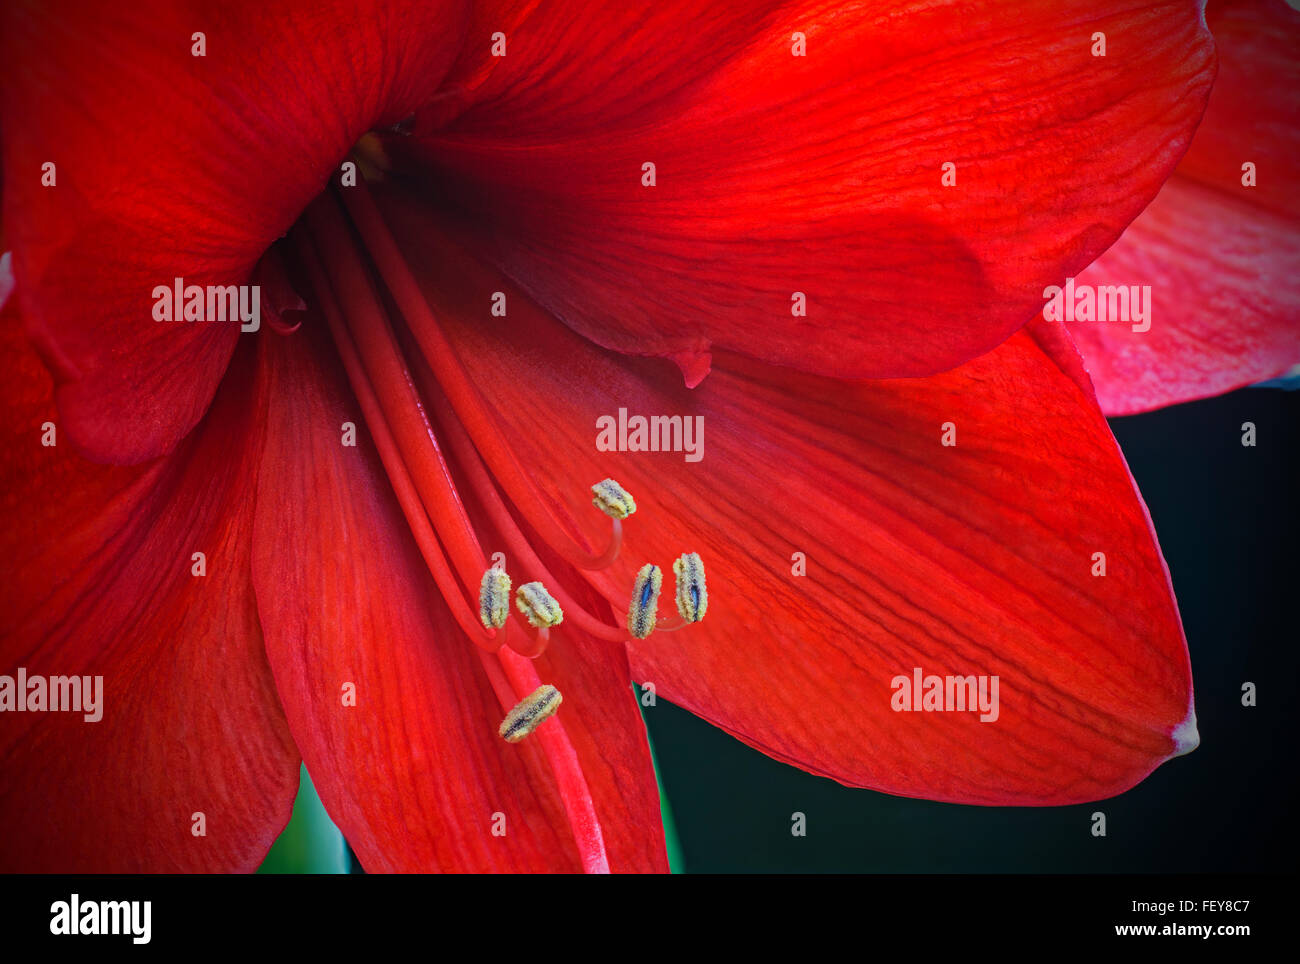 Red Amaryllis flower detail Stock Photo